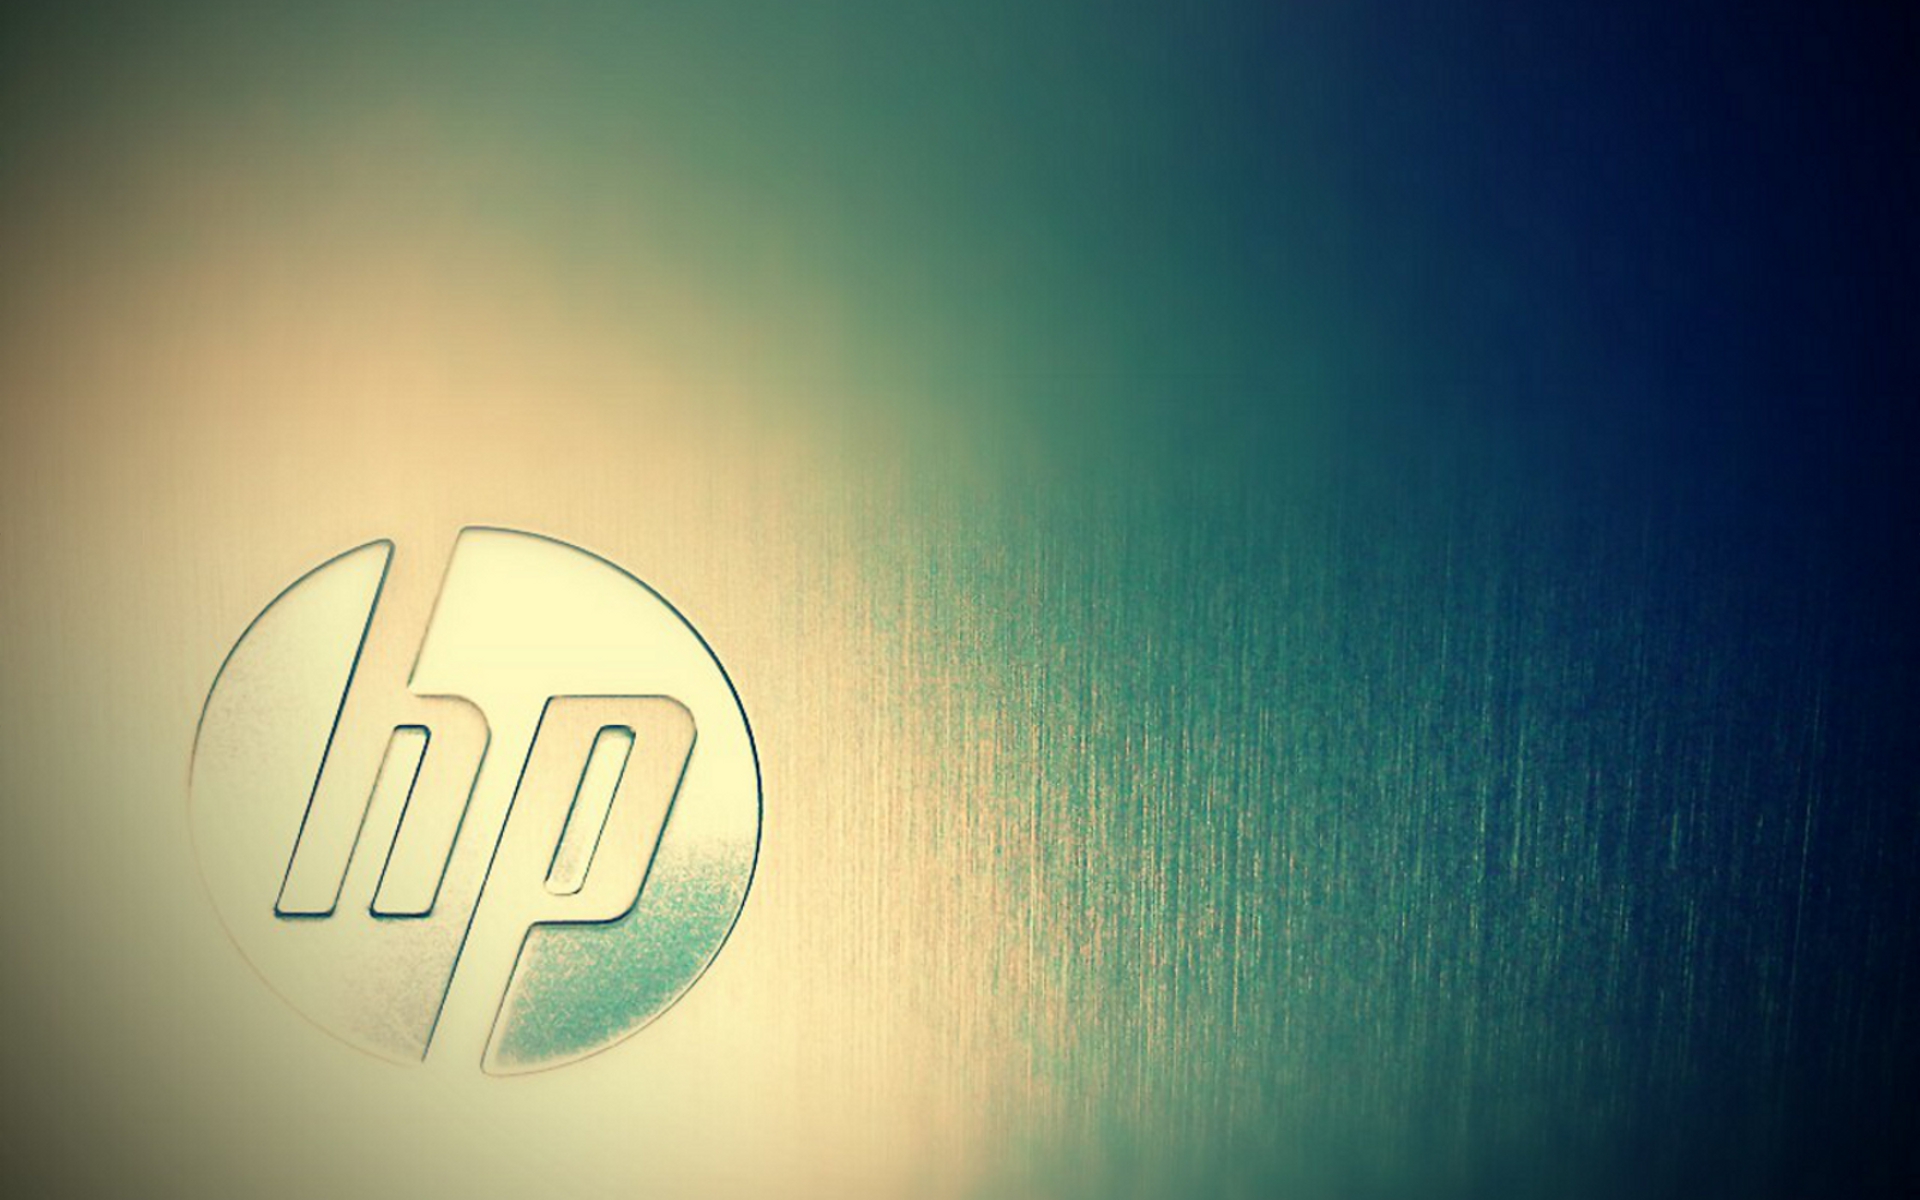 Hewlett Packard HD Wallpaper X Jpeg 98kb